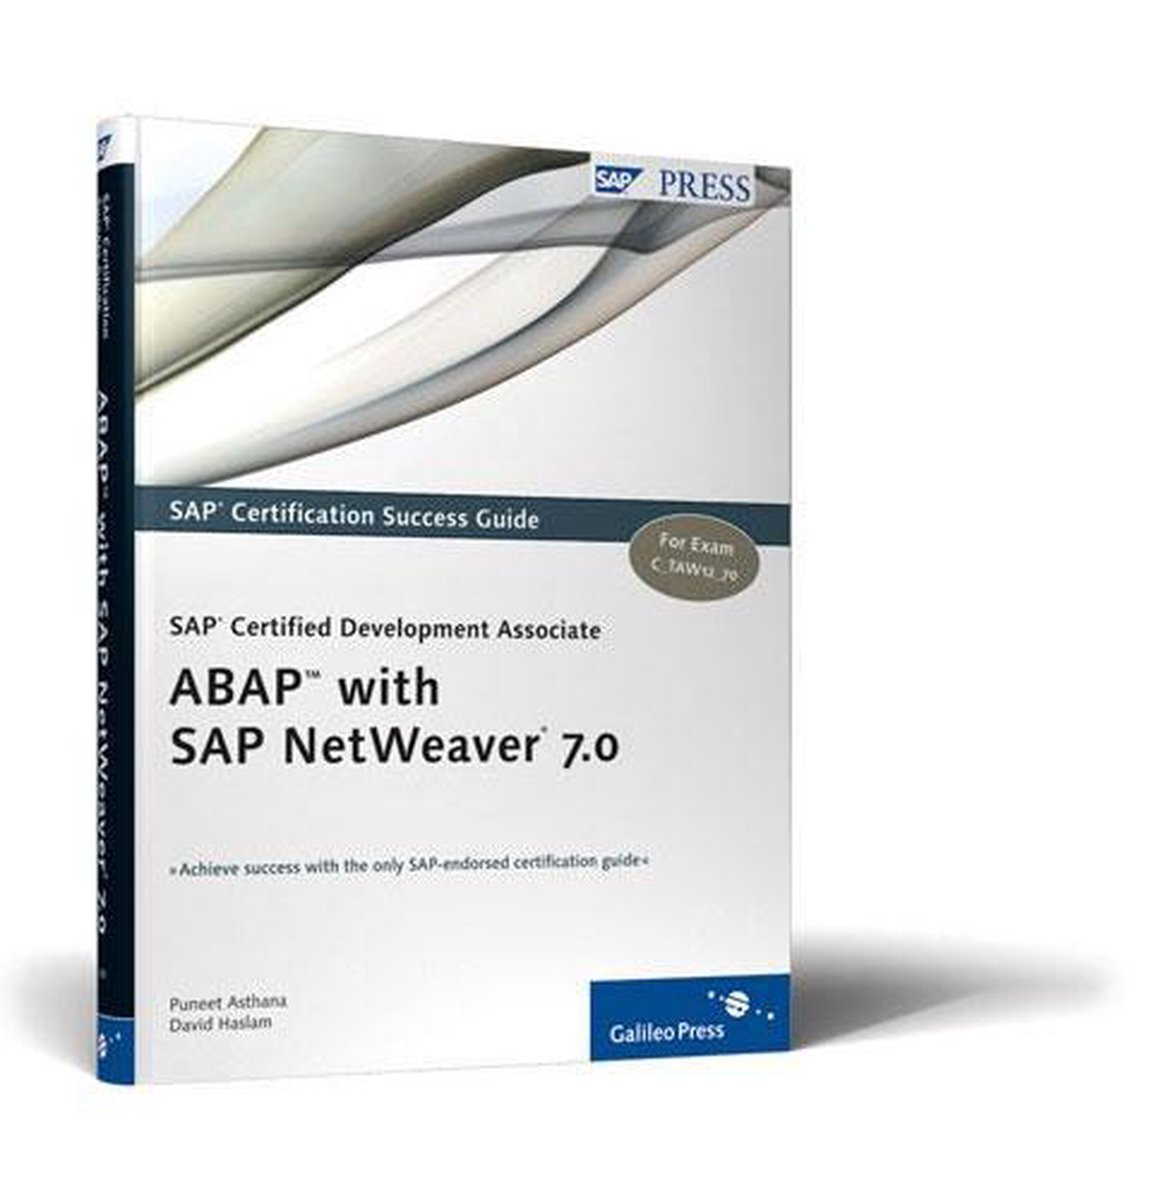 Sap Certified Development Associate - Abap With Sap Netweaver 7.0